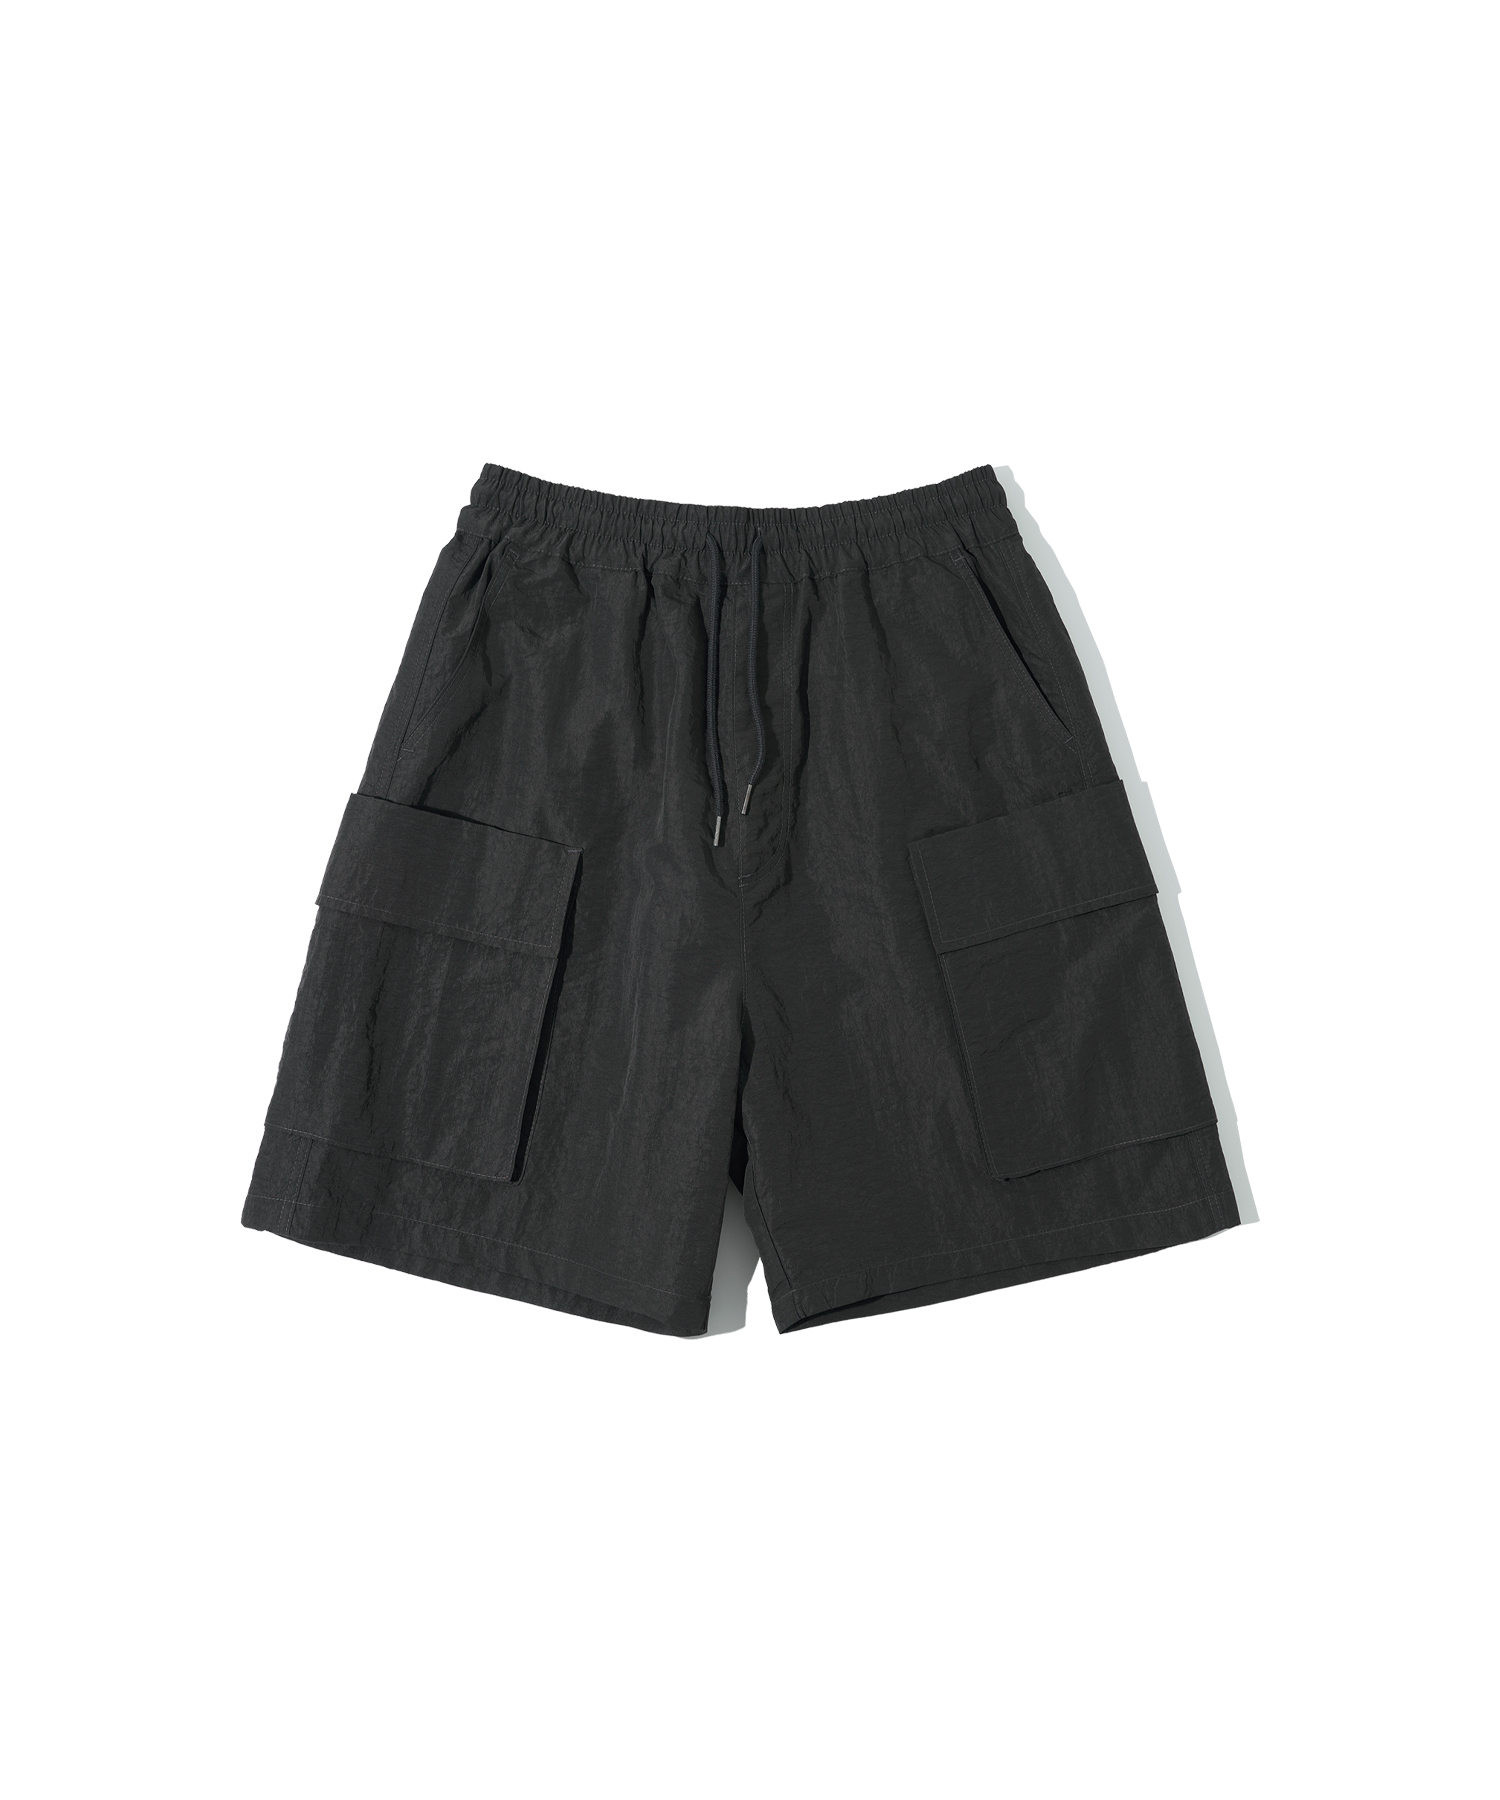 P10002 Bermuda cargo shorts_Charcoal